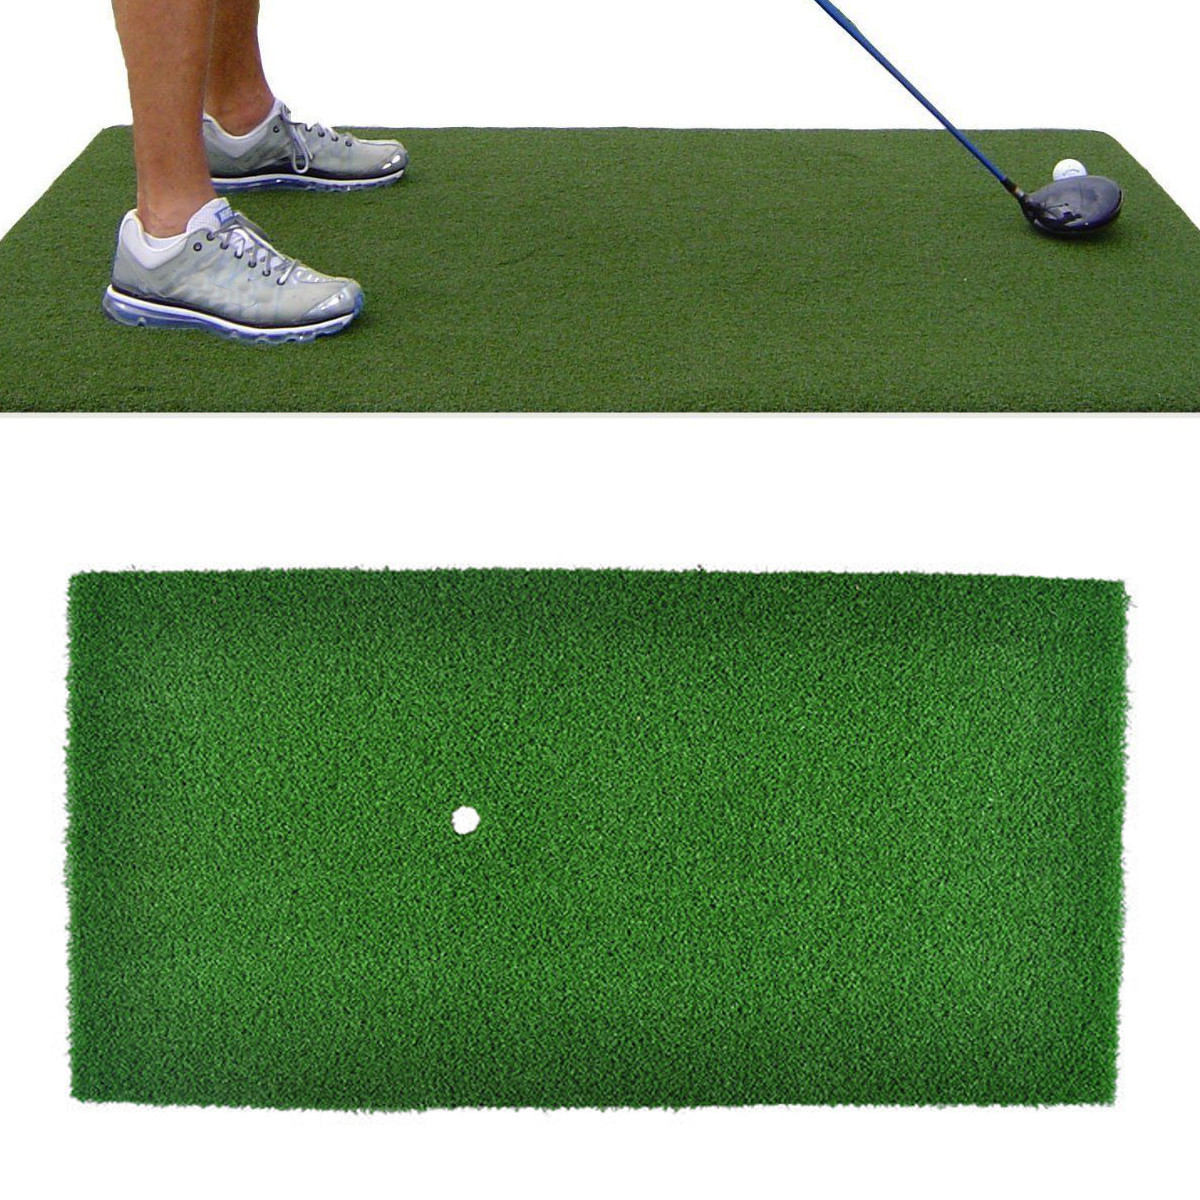 

60x30cm Зеленый гольф Практика Мат Крытый Обучение Backyard Hitting Grass Driving Holder